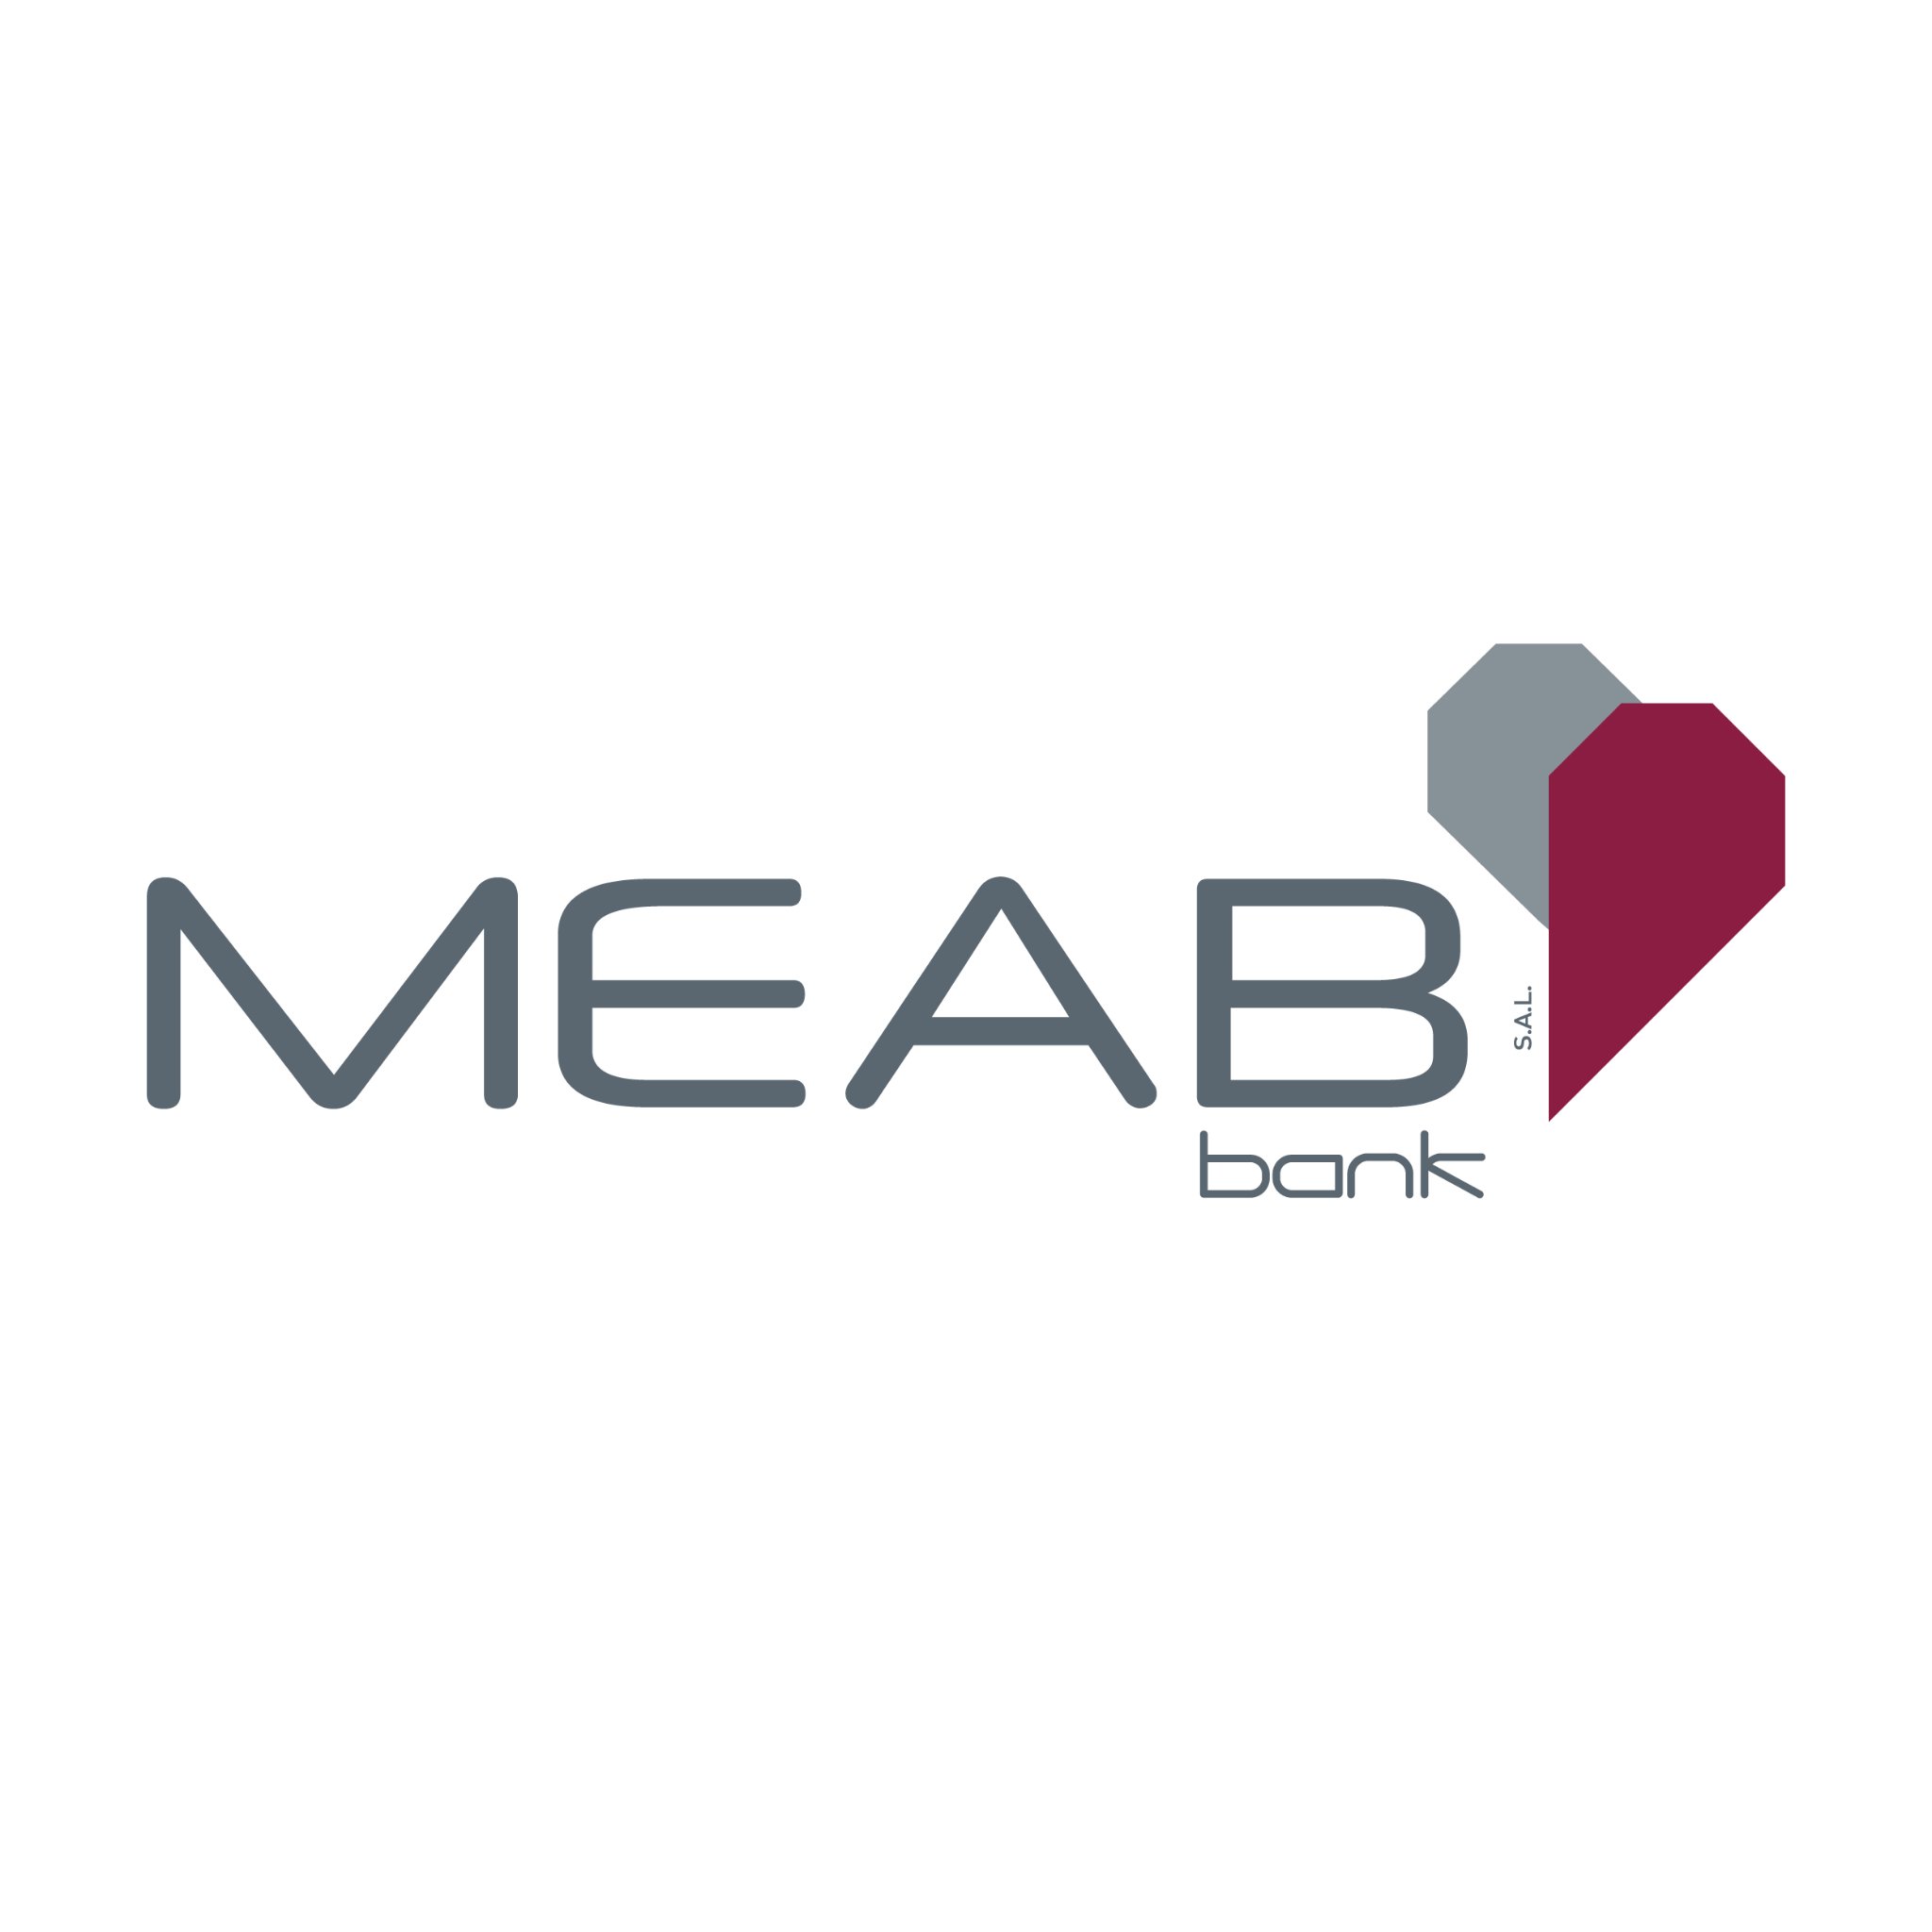 MEAB Bank